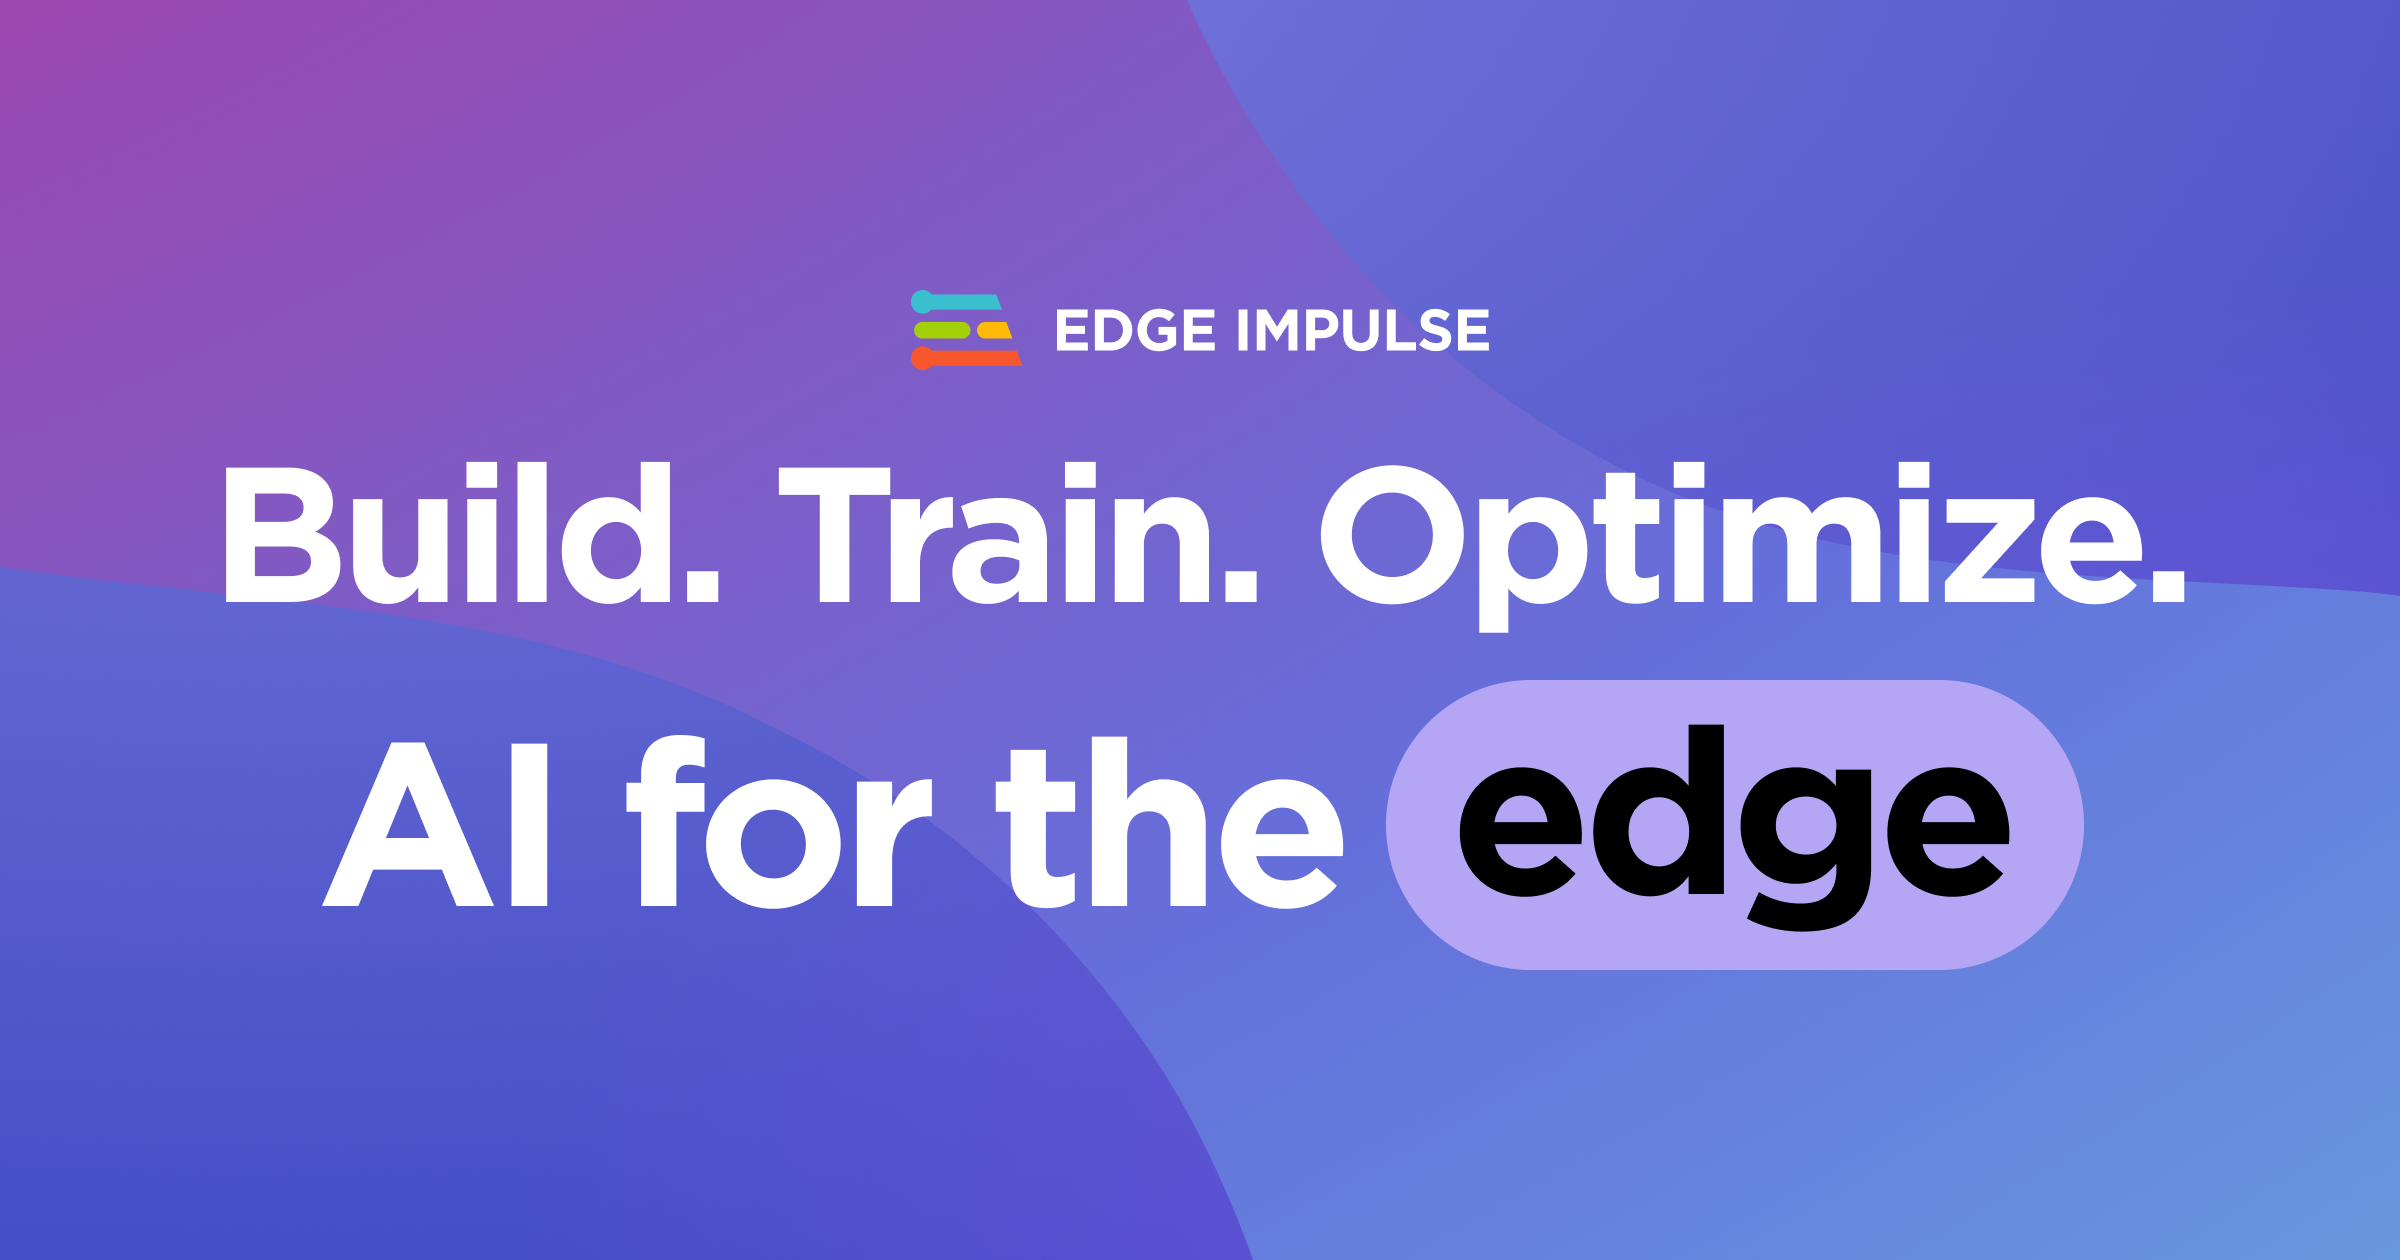 www.edgeimpulse.com